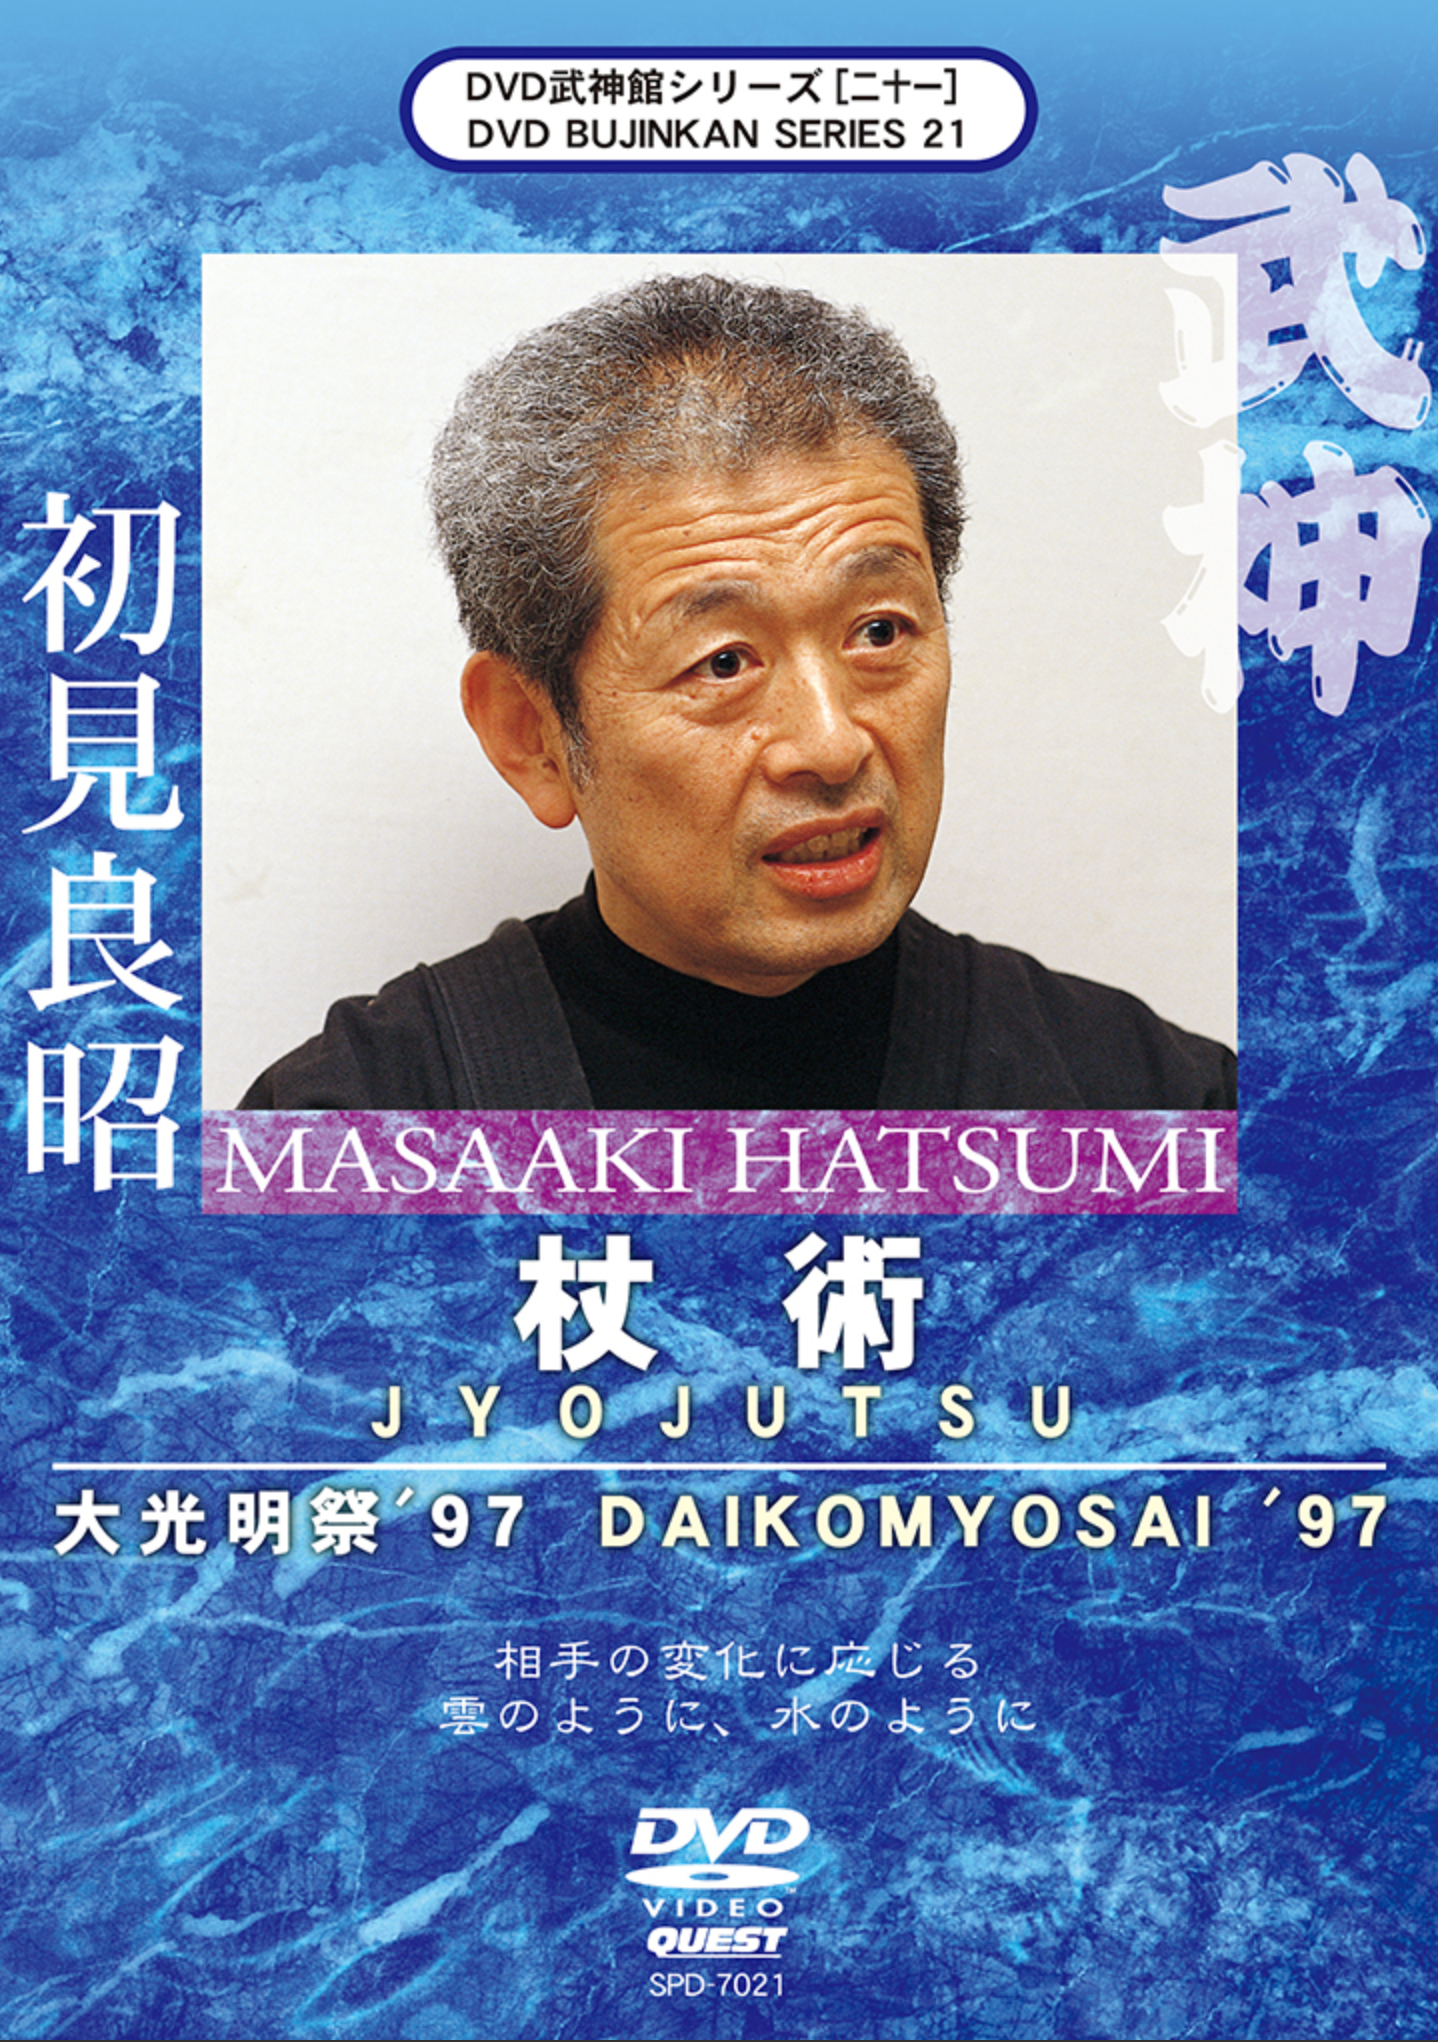 Bujinkan DVD Series 21: Jojutsu with Masaaki Hatsumi - Budovideos Inc